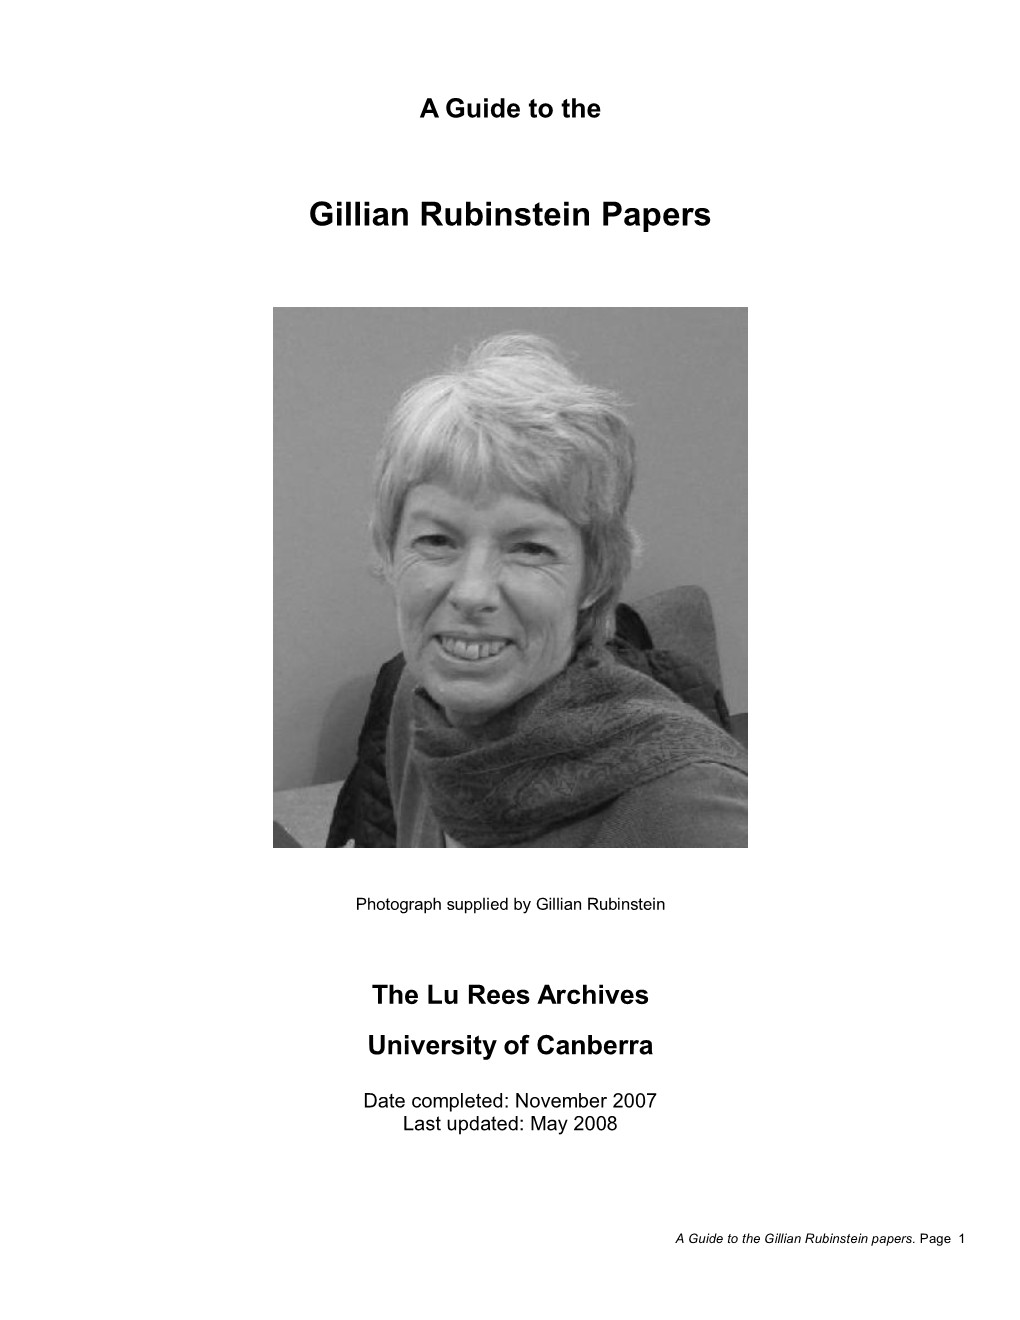 Gillian Rubinstein Papers